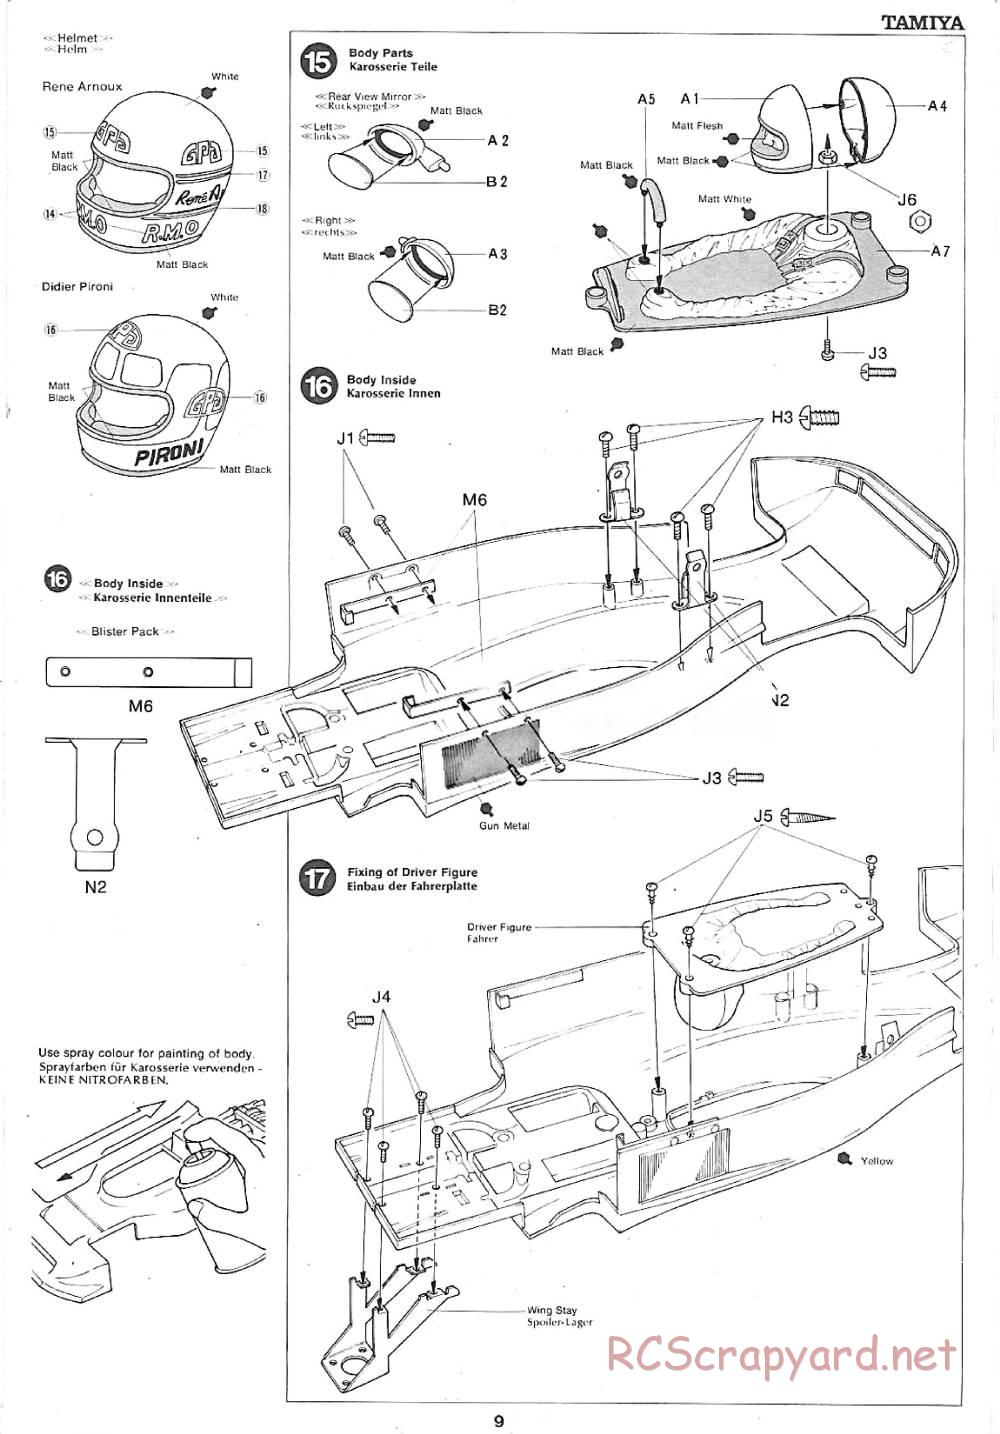 Tamiya - Martini Mk22 Renault (F2) - 58014 - Manual - Page 9